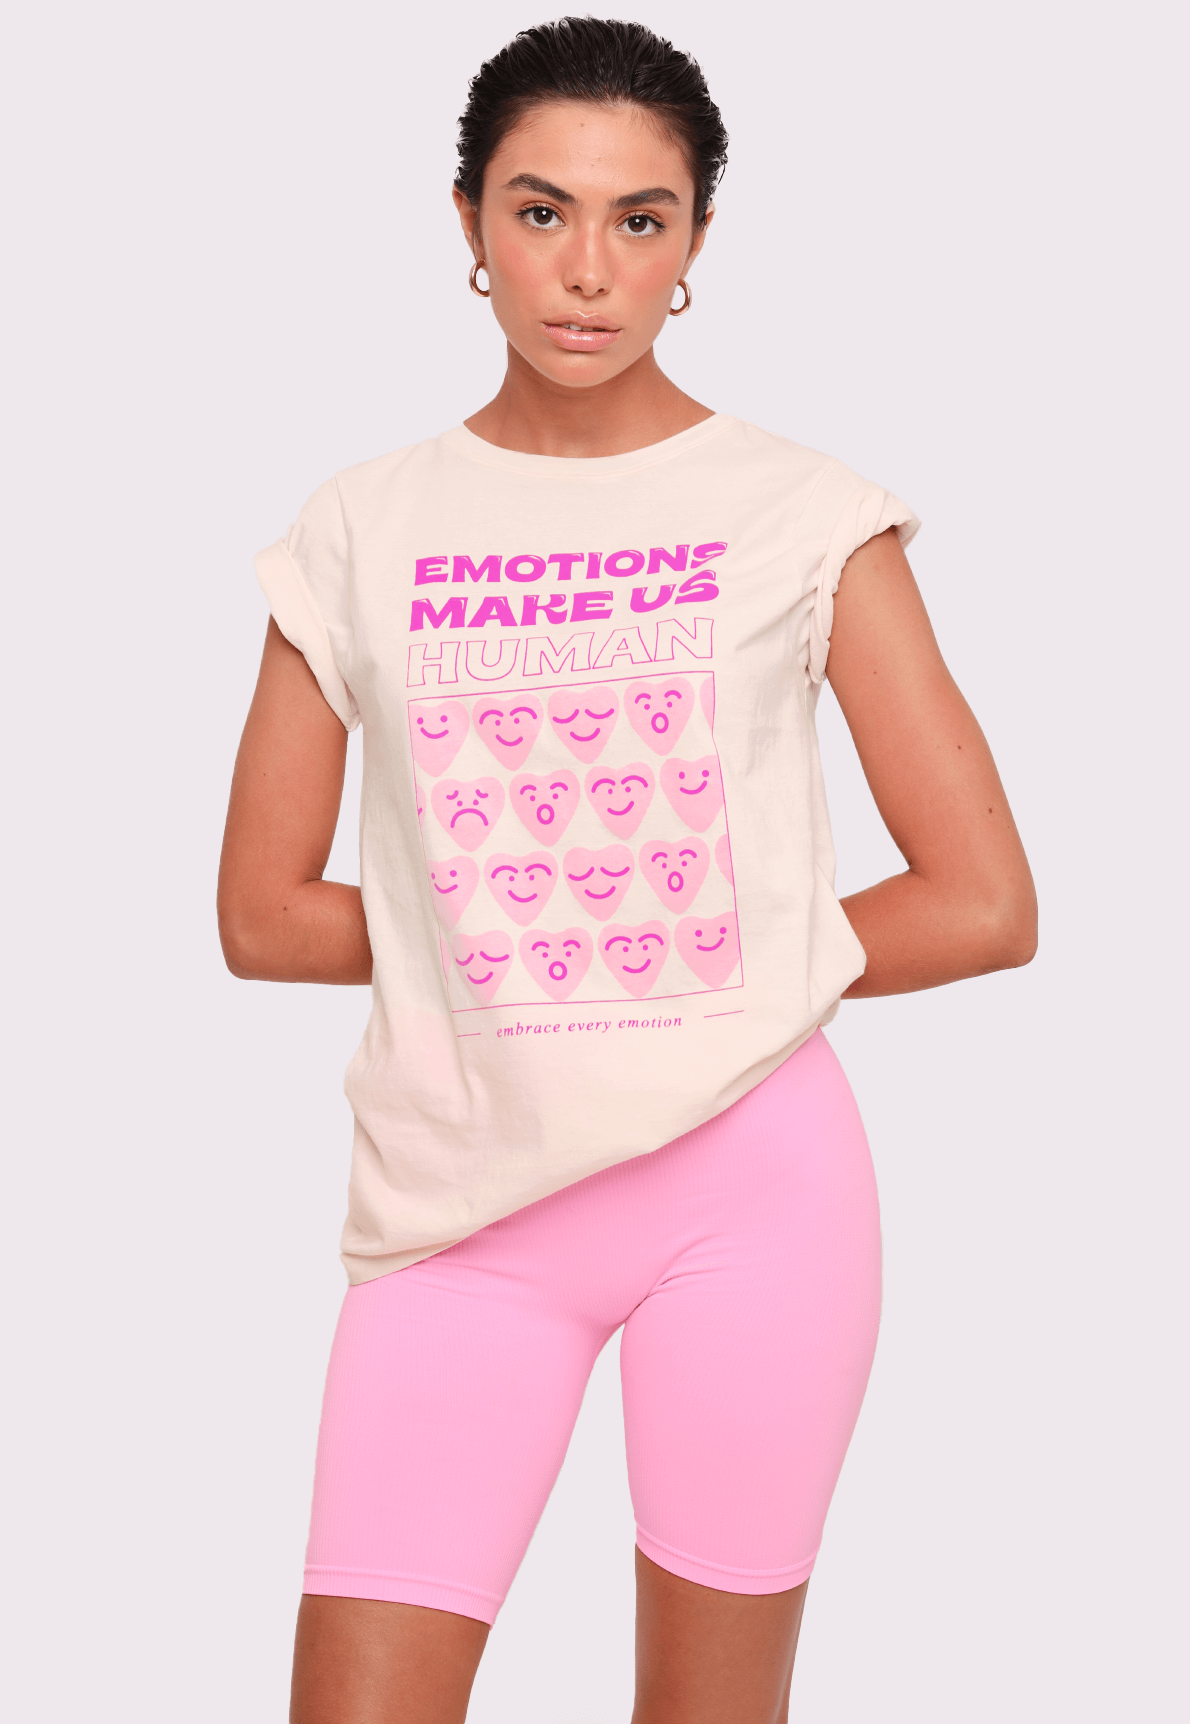 42351-t-shirt-emotions-make-us-human-mundo-lolita-01